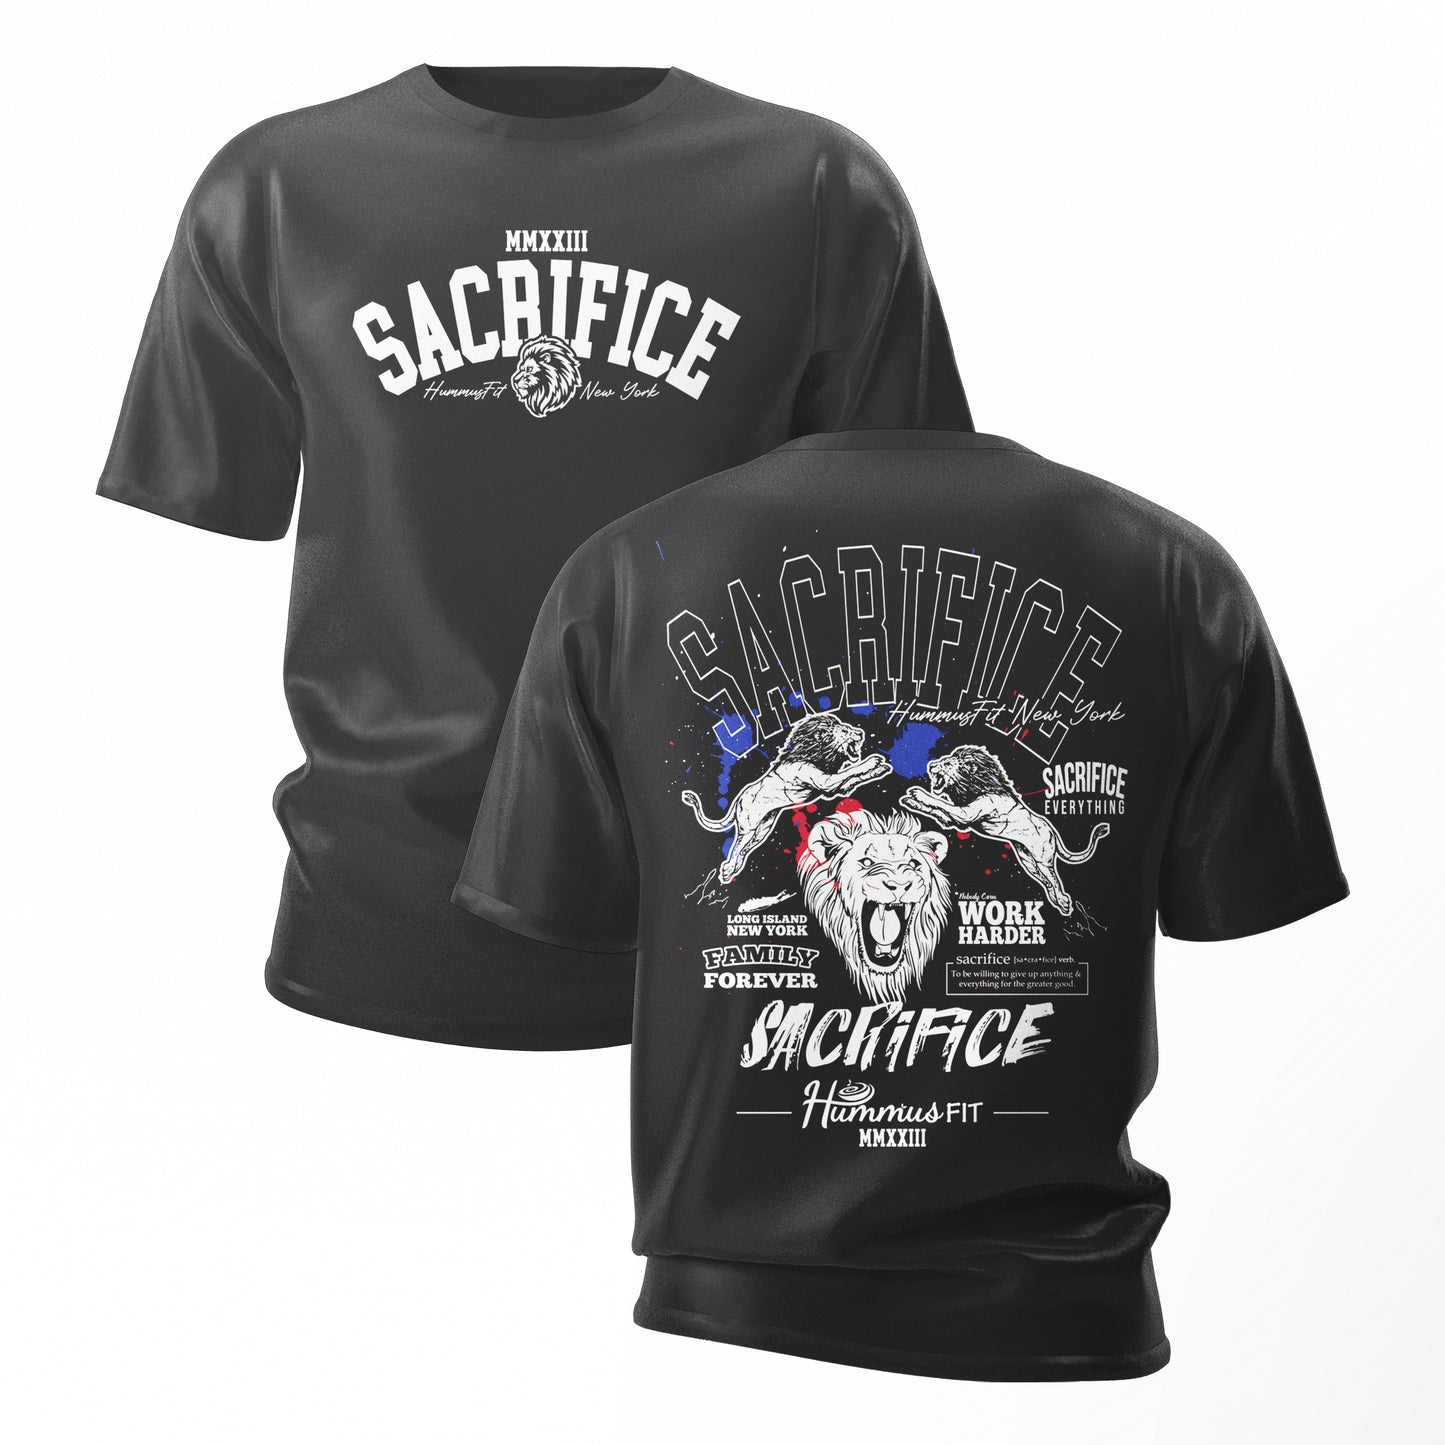 Camiseta extragrande MMXXIII Sacrifice (stock limitado)